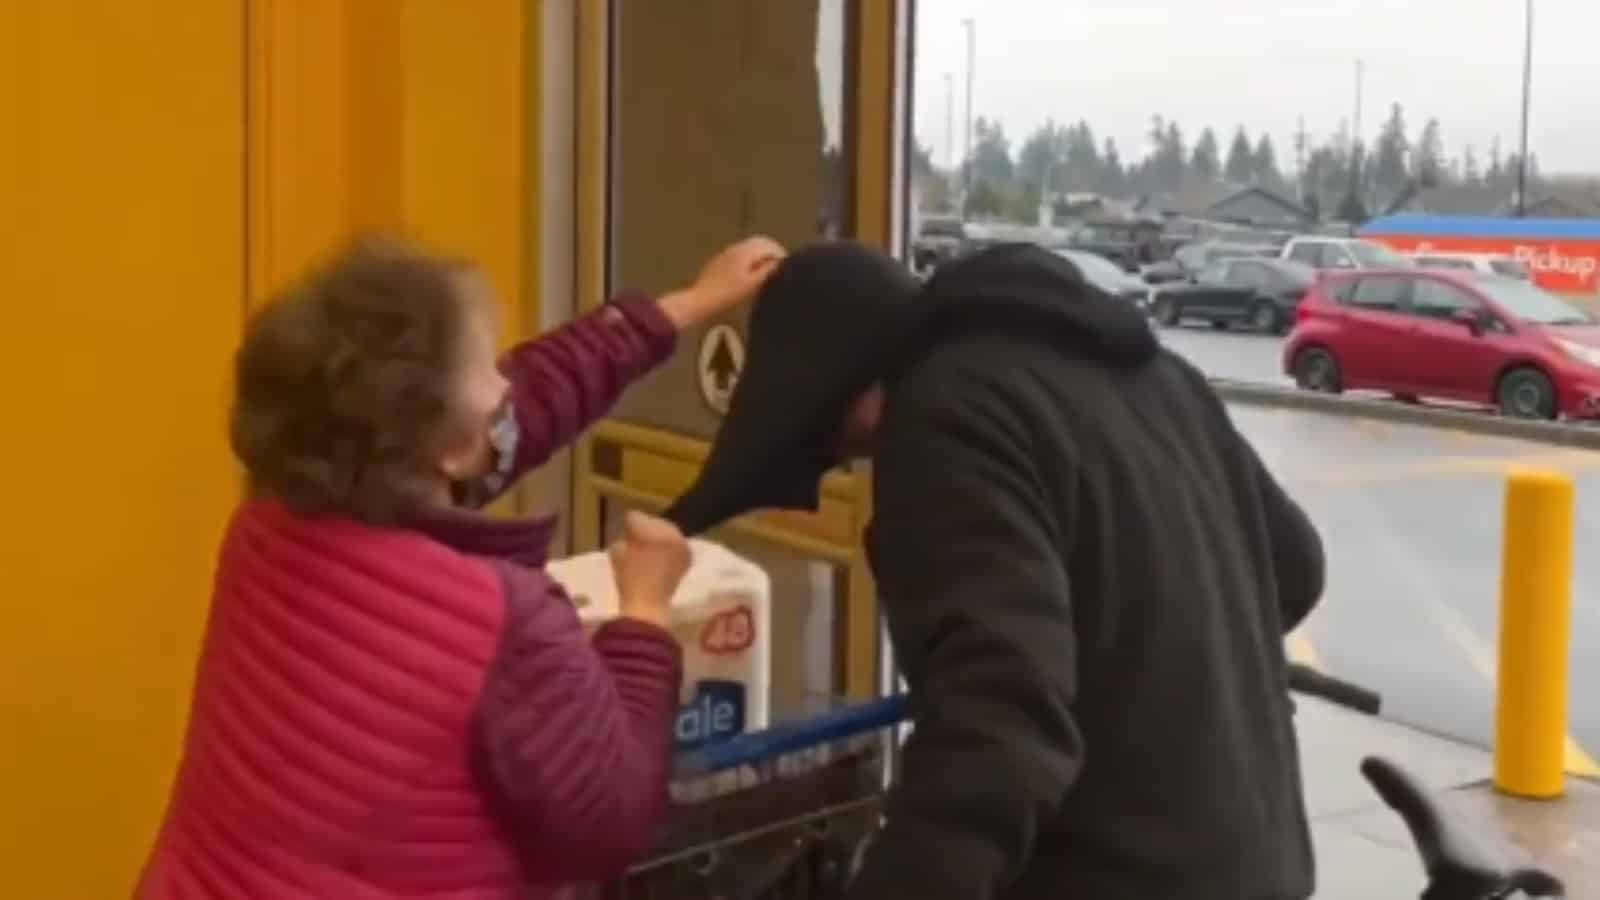 Grandma fights shoplifter in viral video